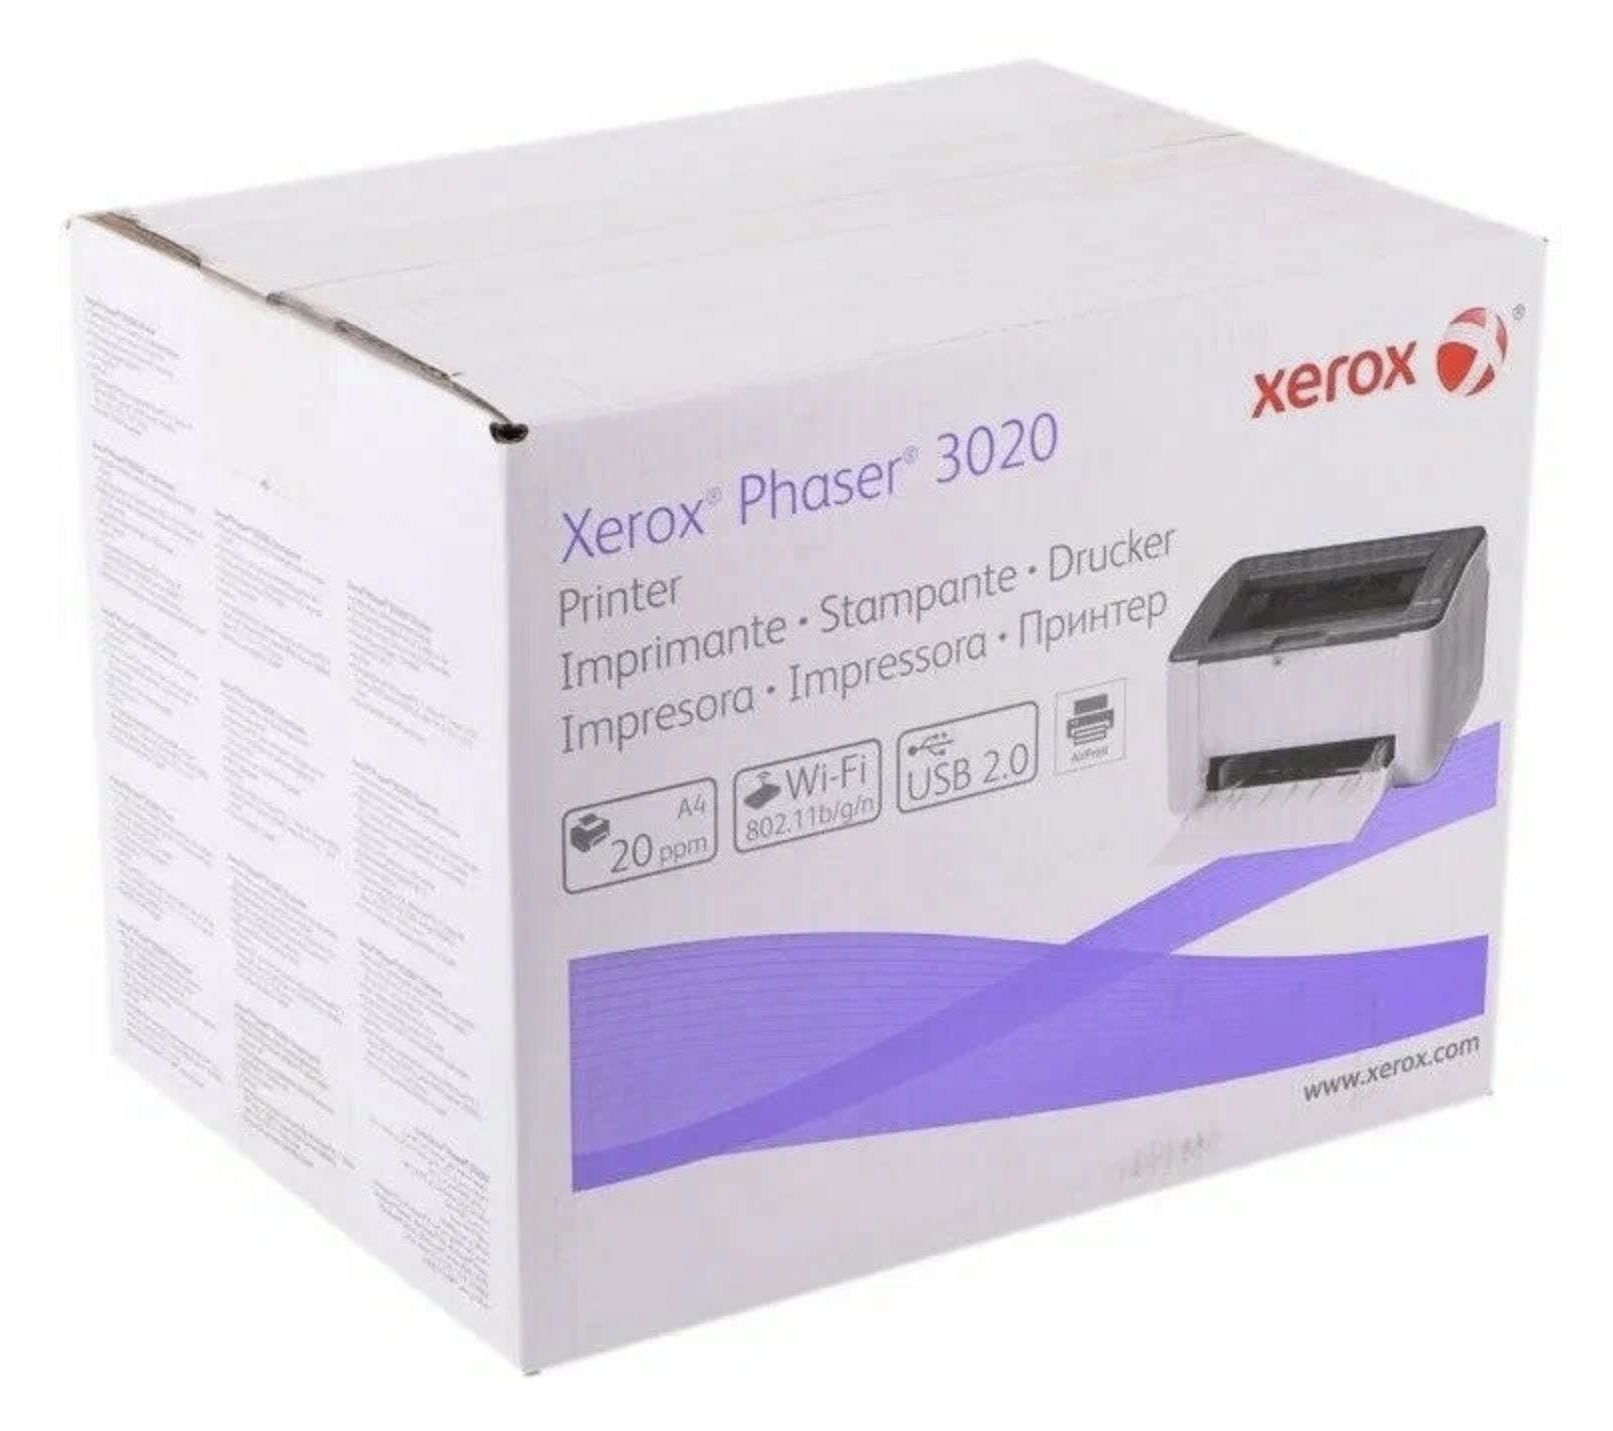 Принтер phaser 3020 купить. Xerox Phaser 3020. Принтер Xerox Phaser 3020. Принтер Xerox Phaser 3020bi. Xerox Phaser 3020bi, ч/б, a4.